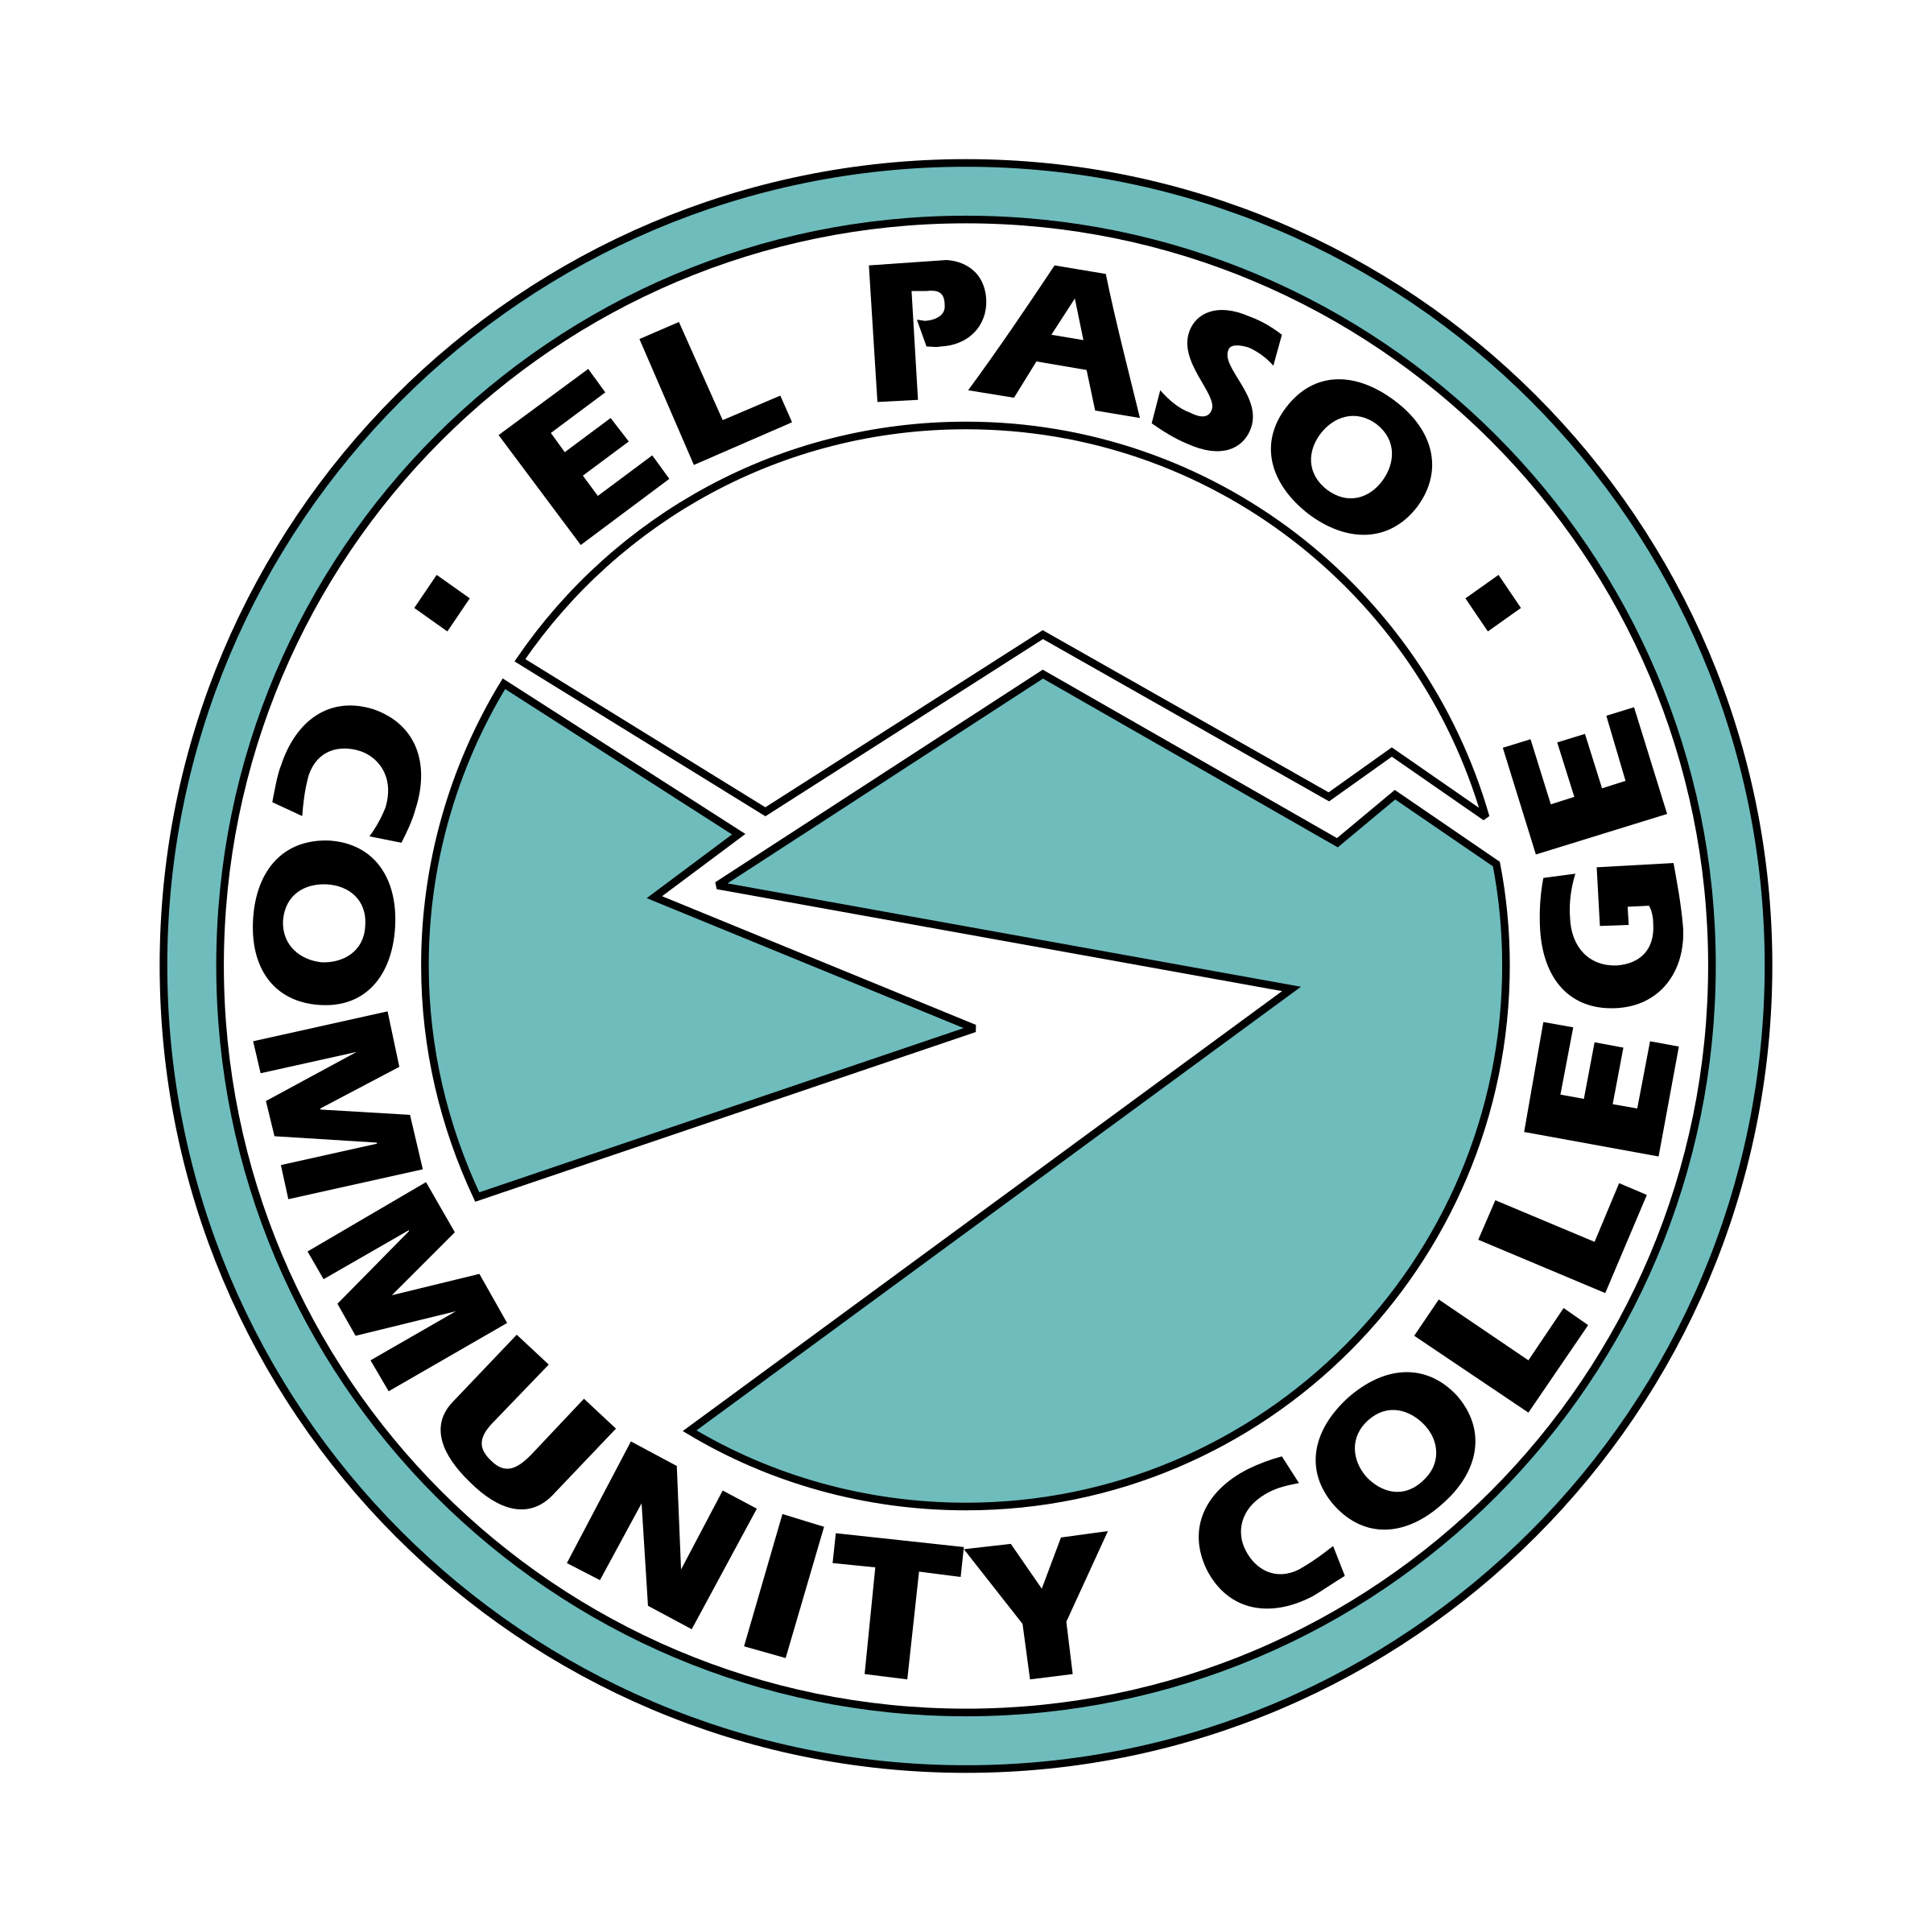 EPCC Logo - El Paso Community College Logo PNG Transparent & SVG Vector ...